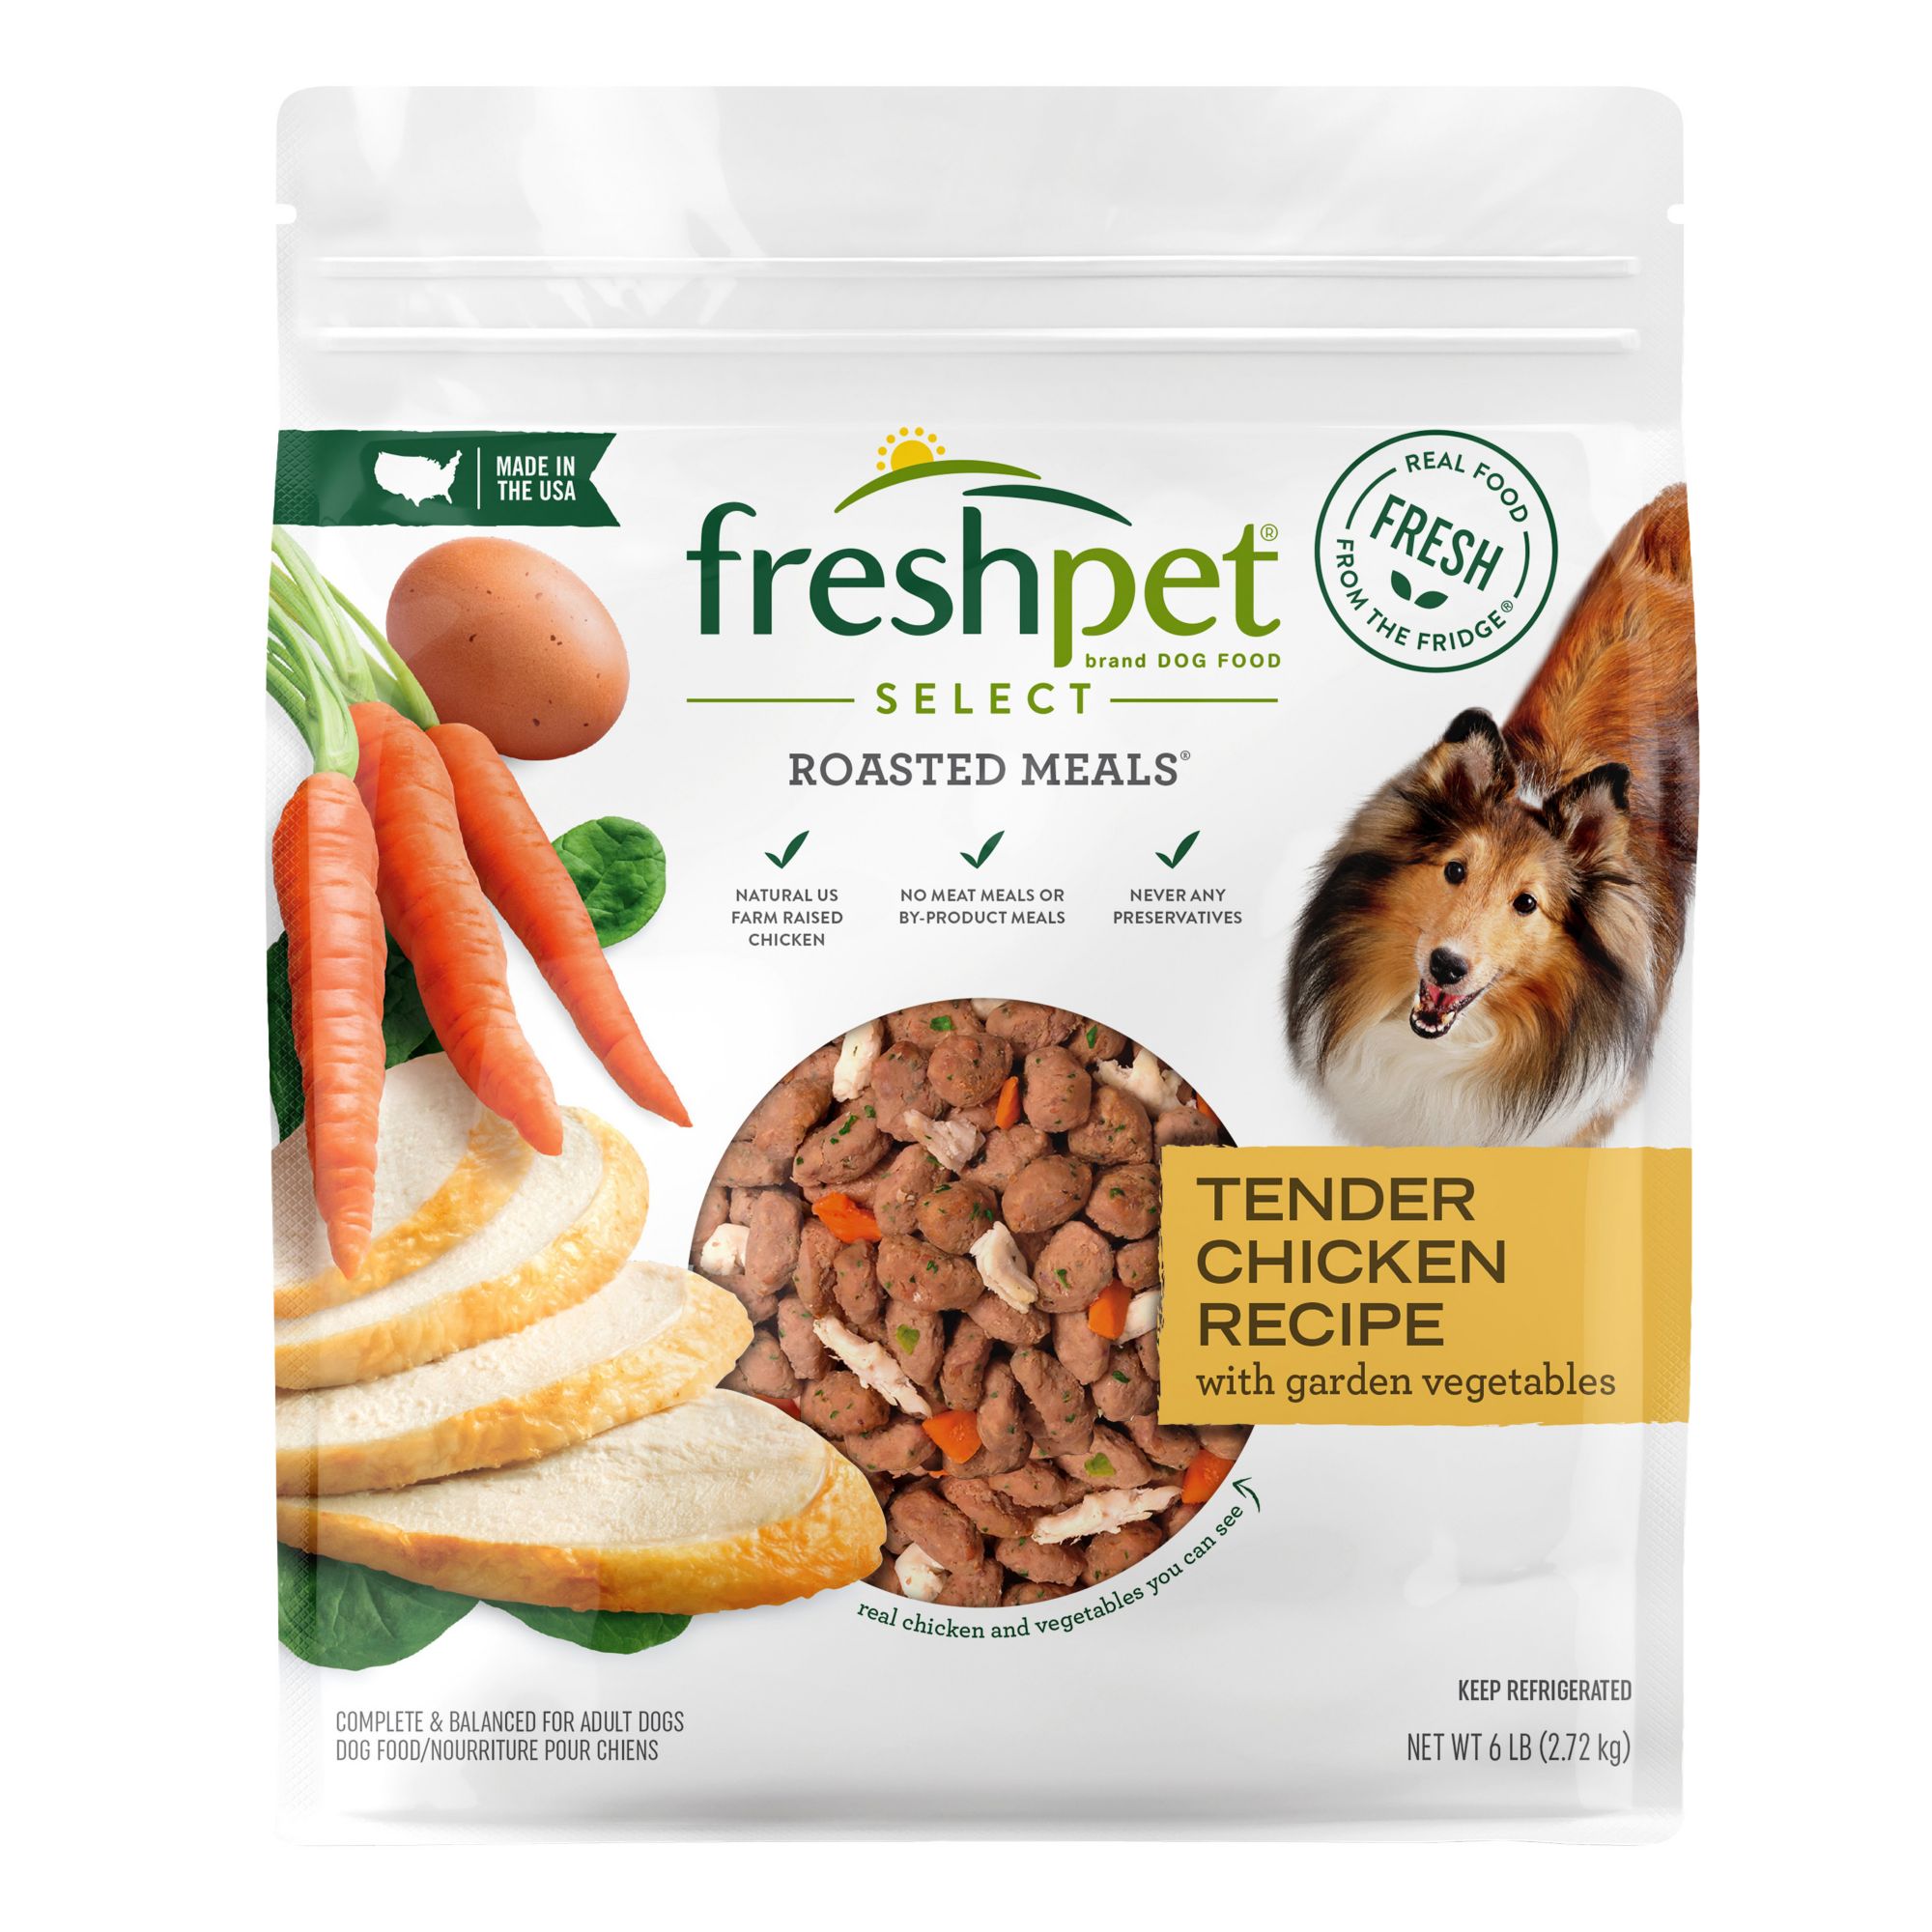 freshpet nutrition information